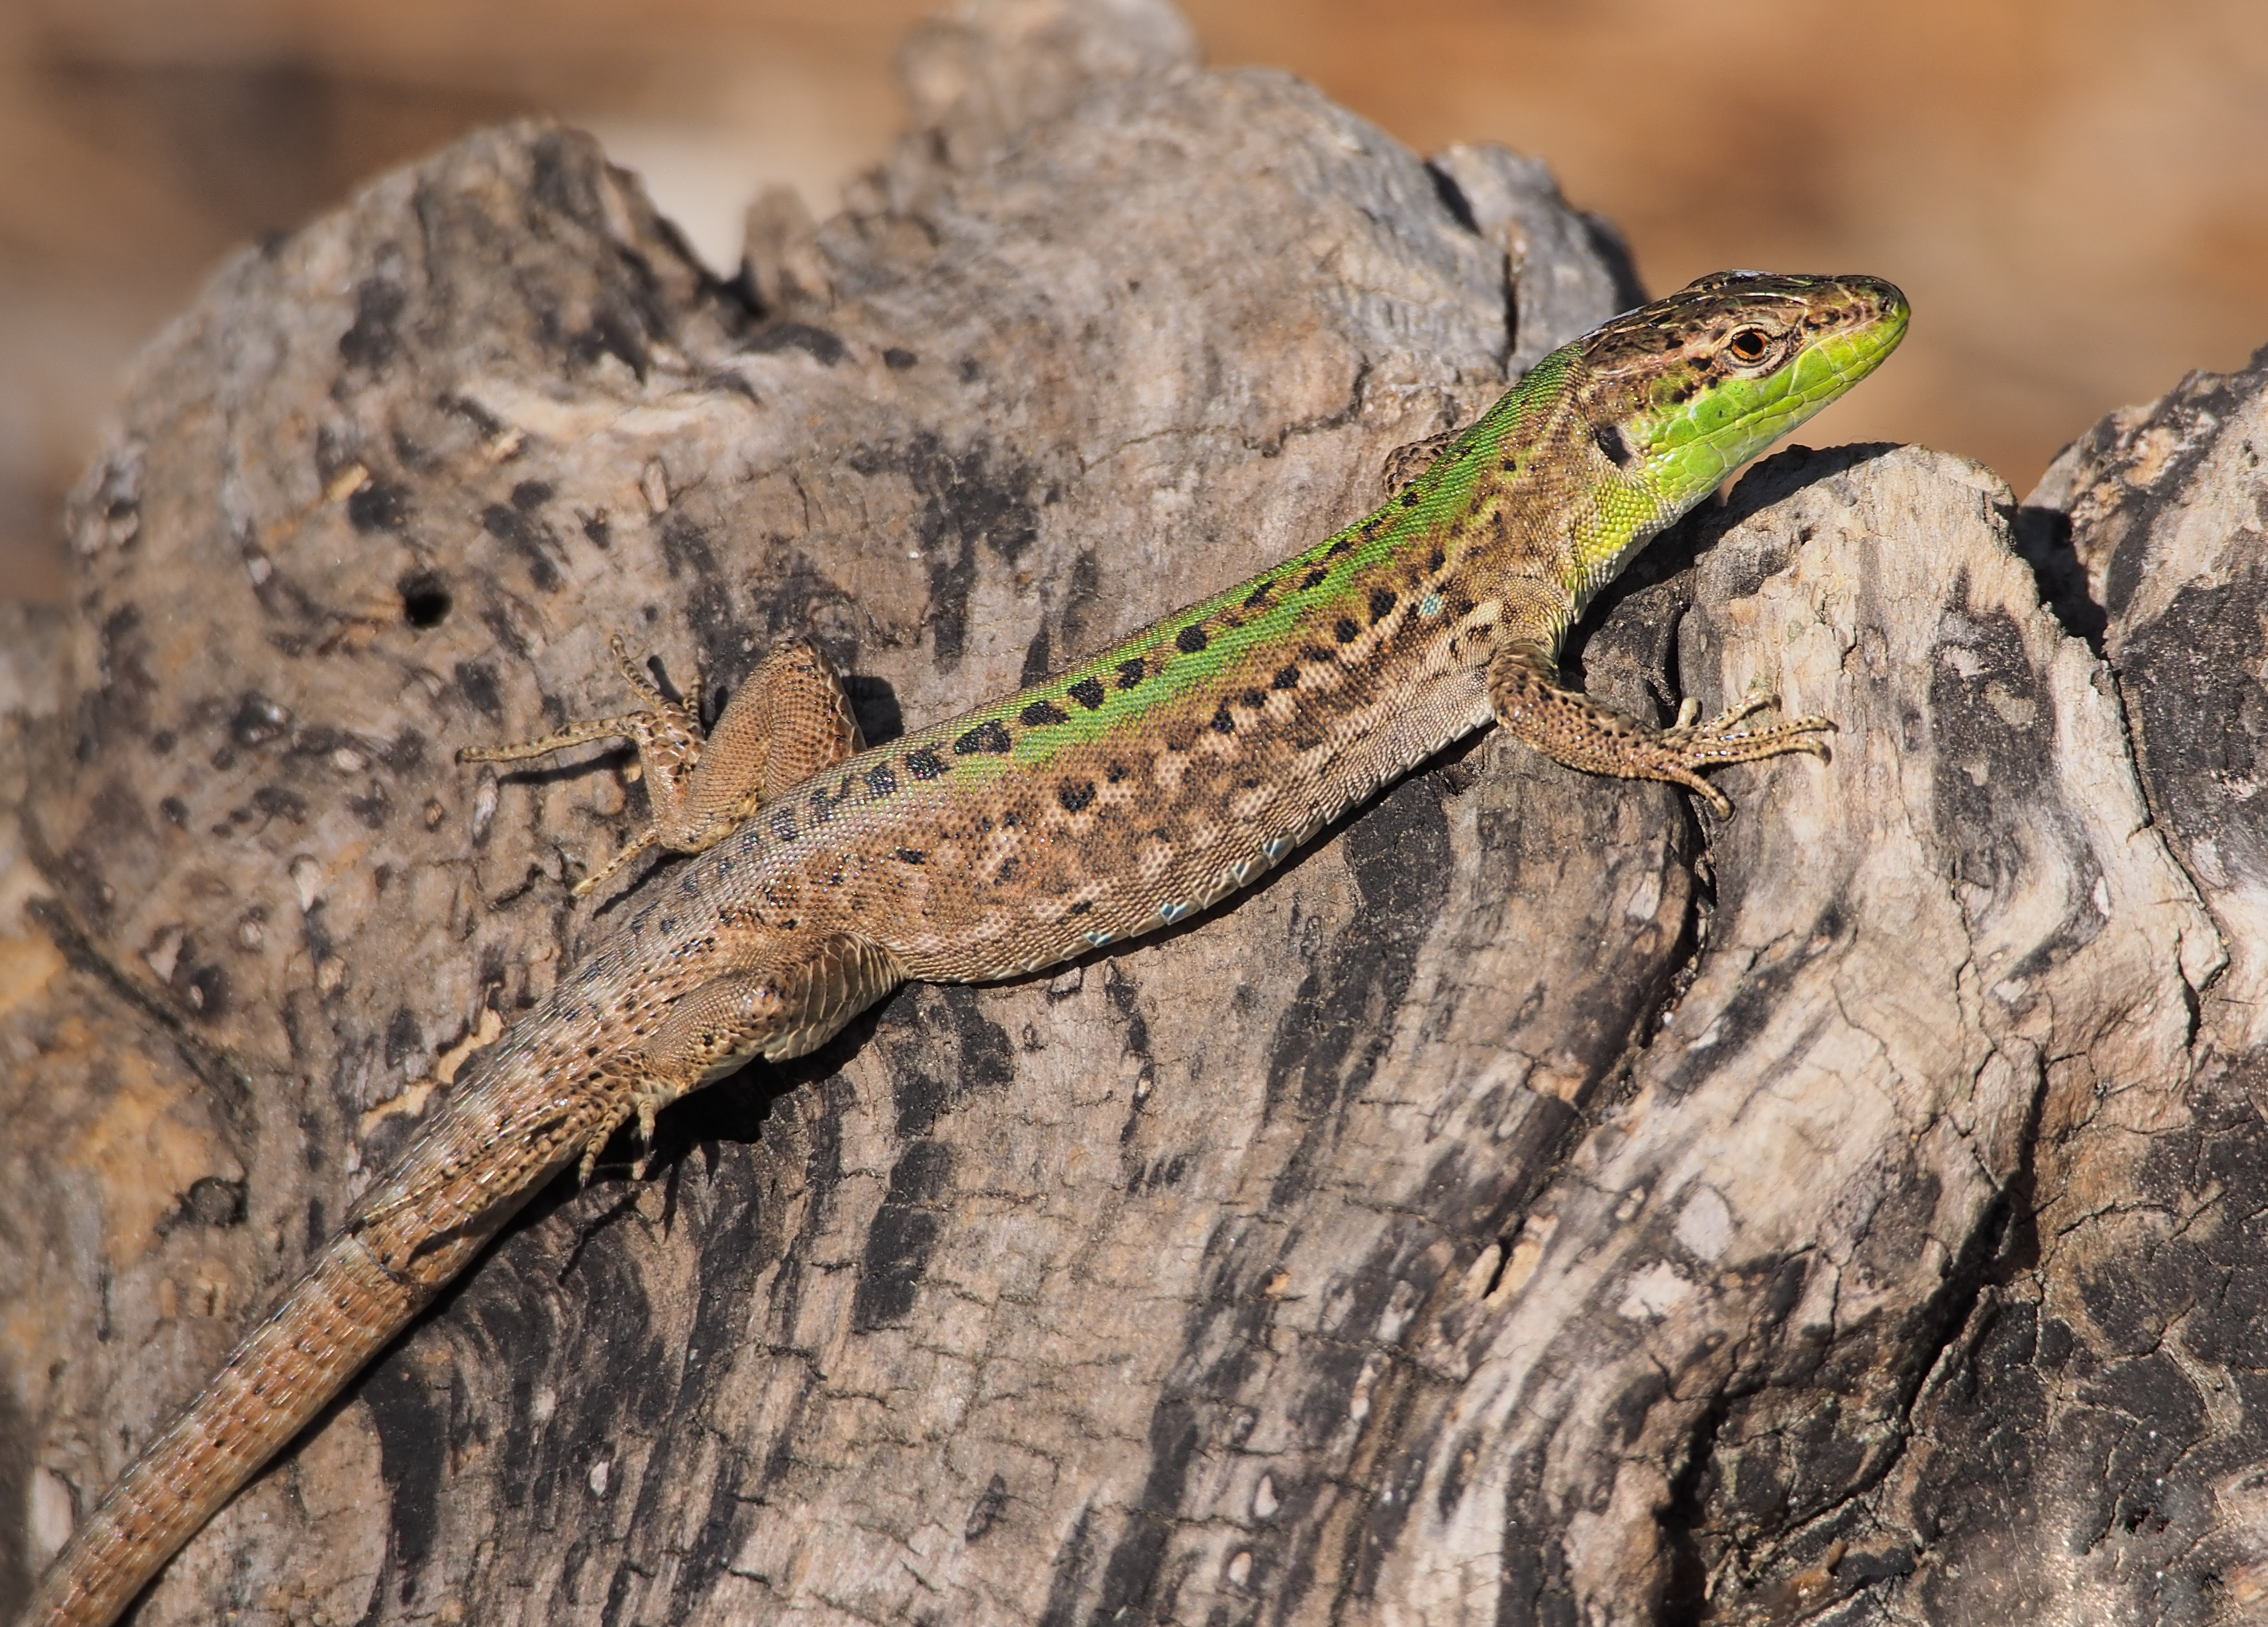 File:Podarcis sicula taking morning sunbath (Italian wall lizard ...